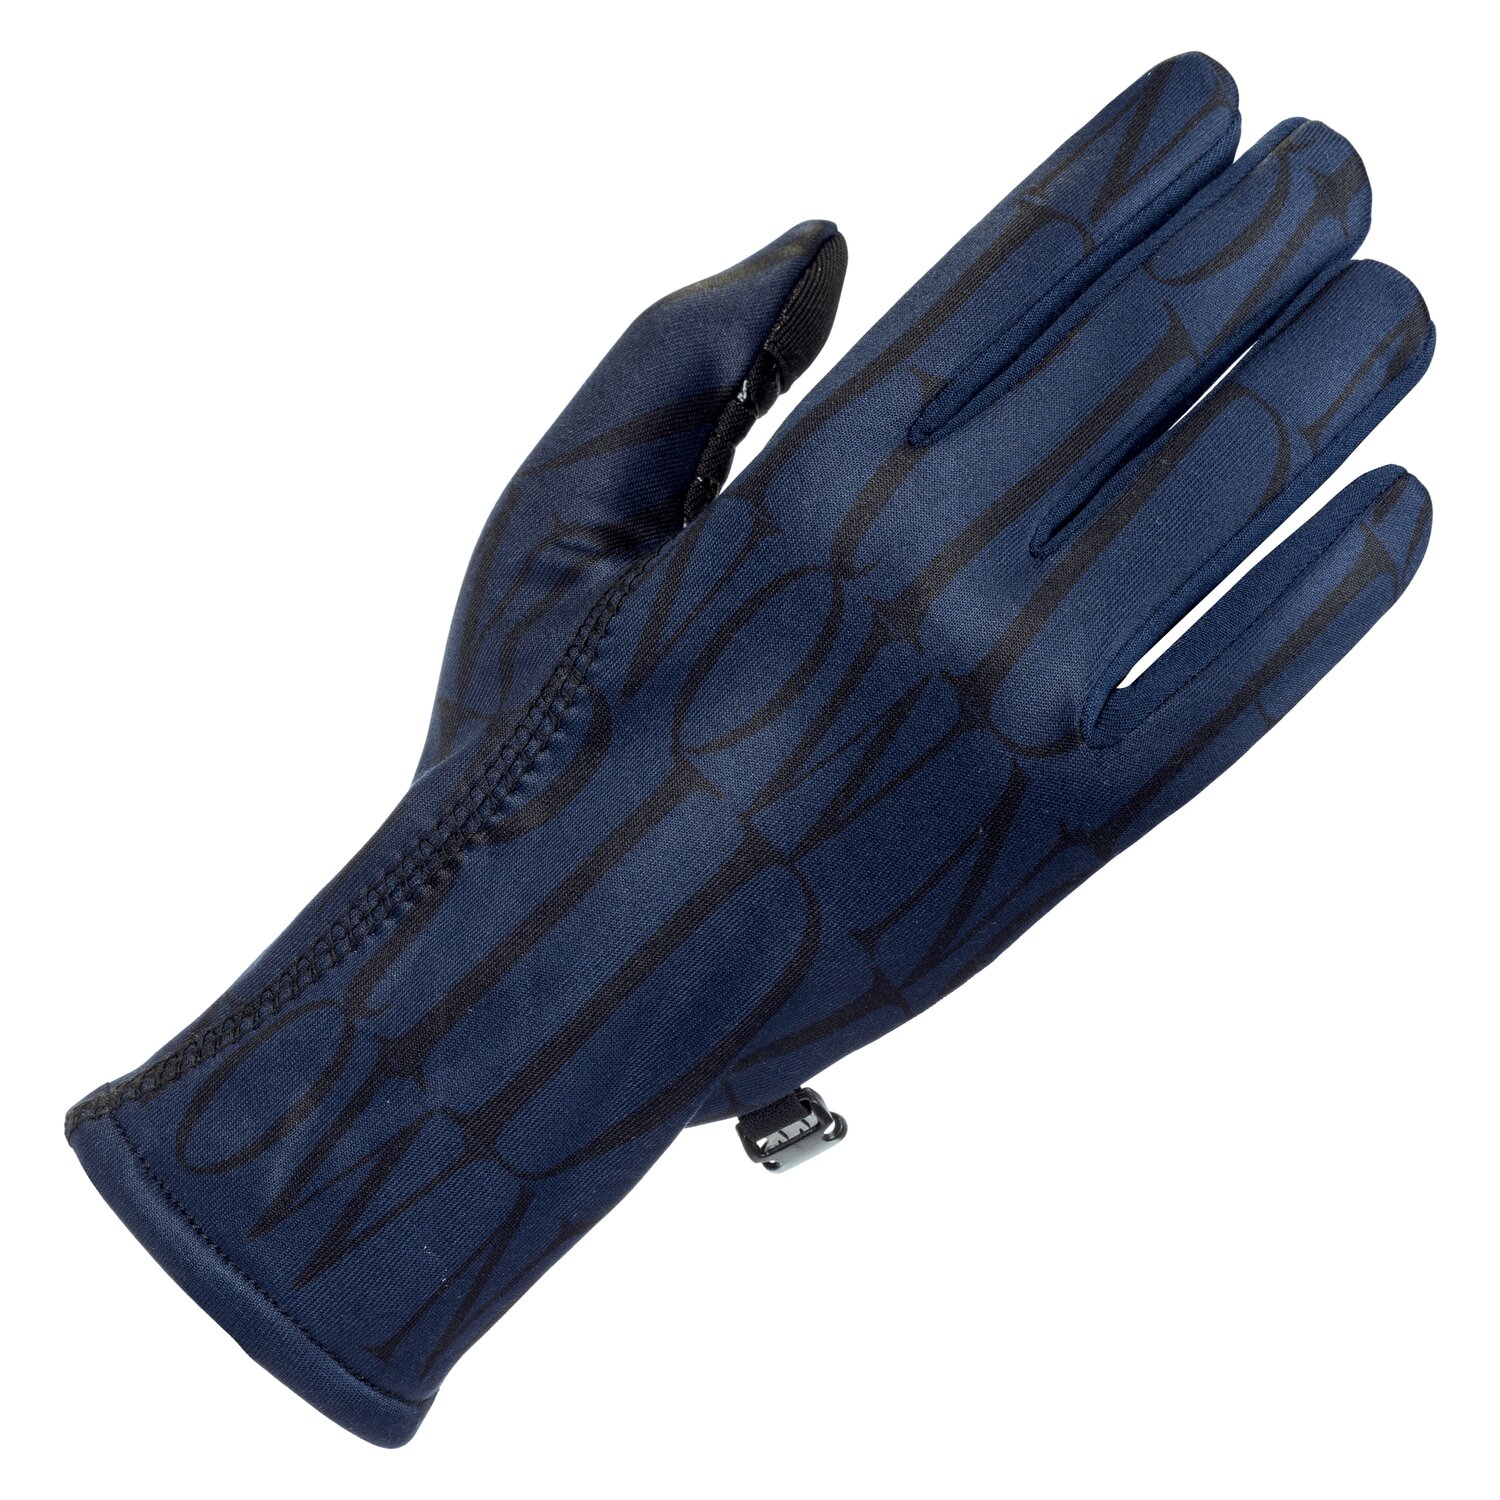 RIDE now Handschuhe im Alloverdesign 